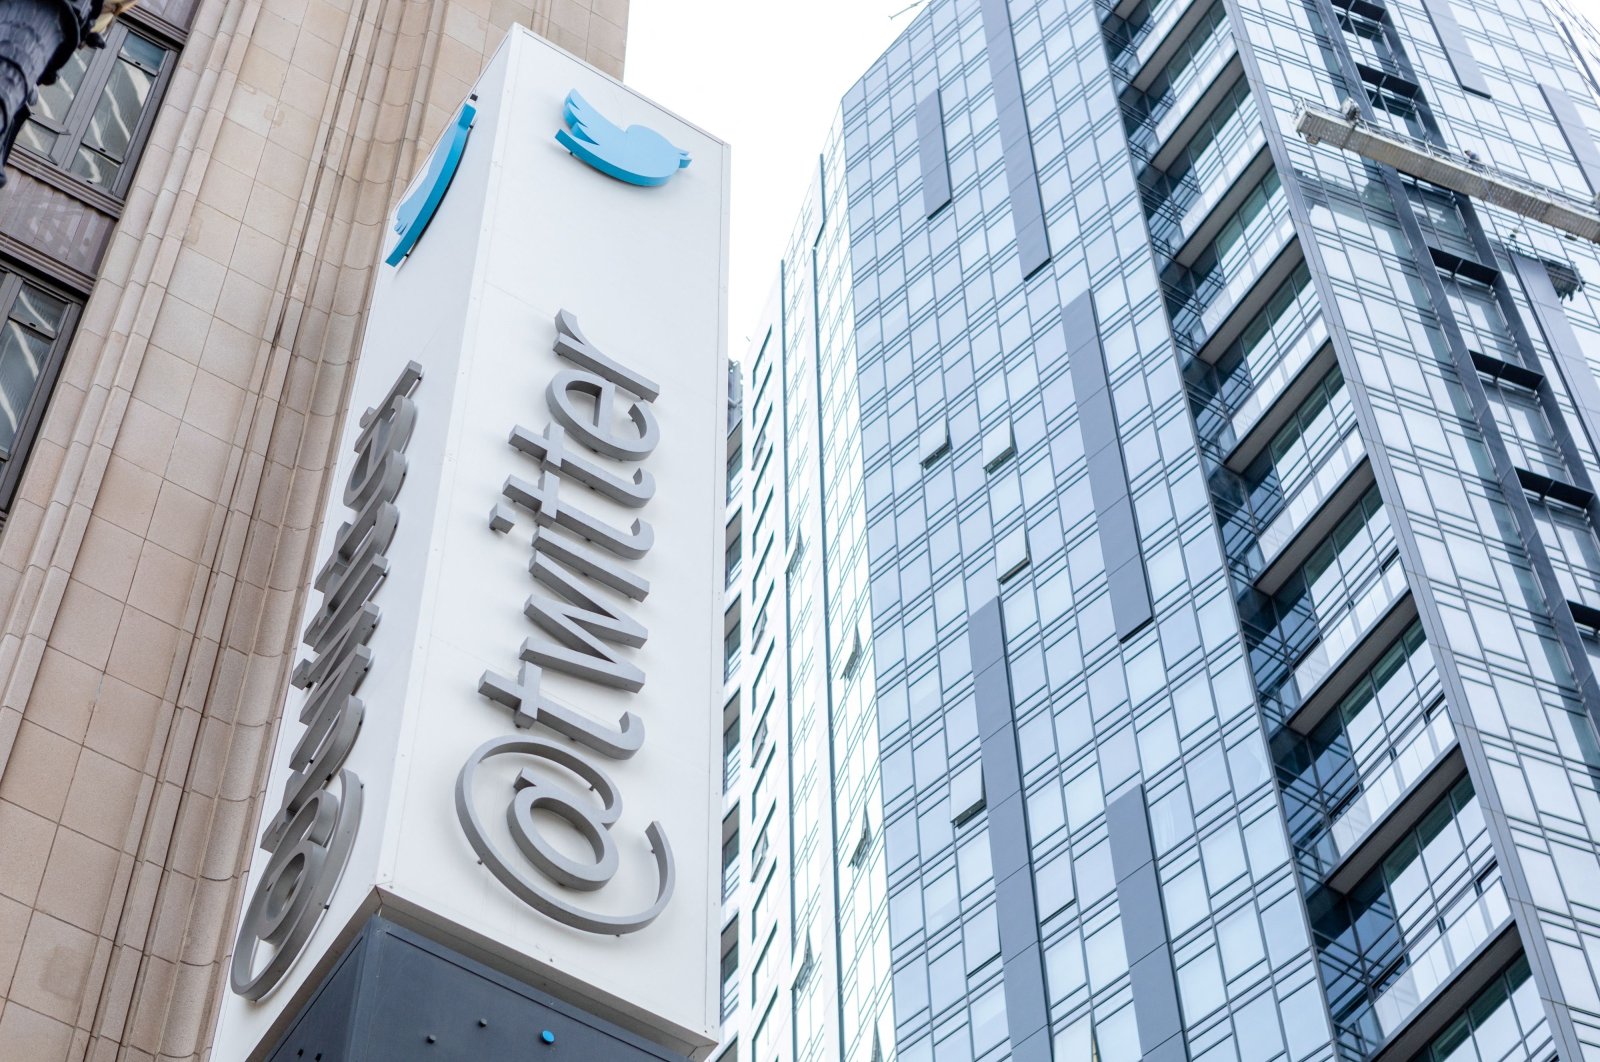 Twitter diserbu oleh akun palsu setelah verifikasi dibatalkan